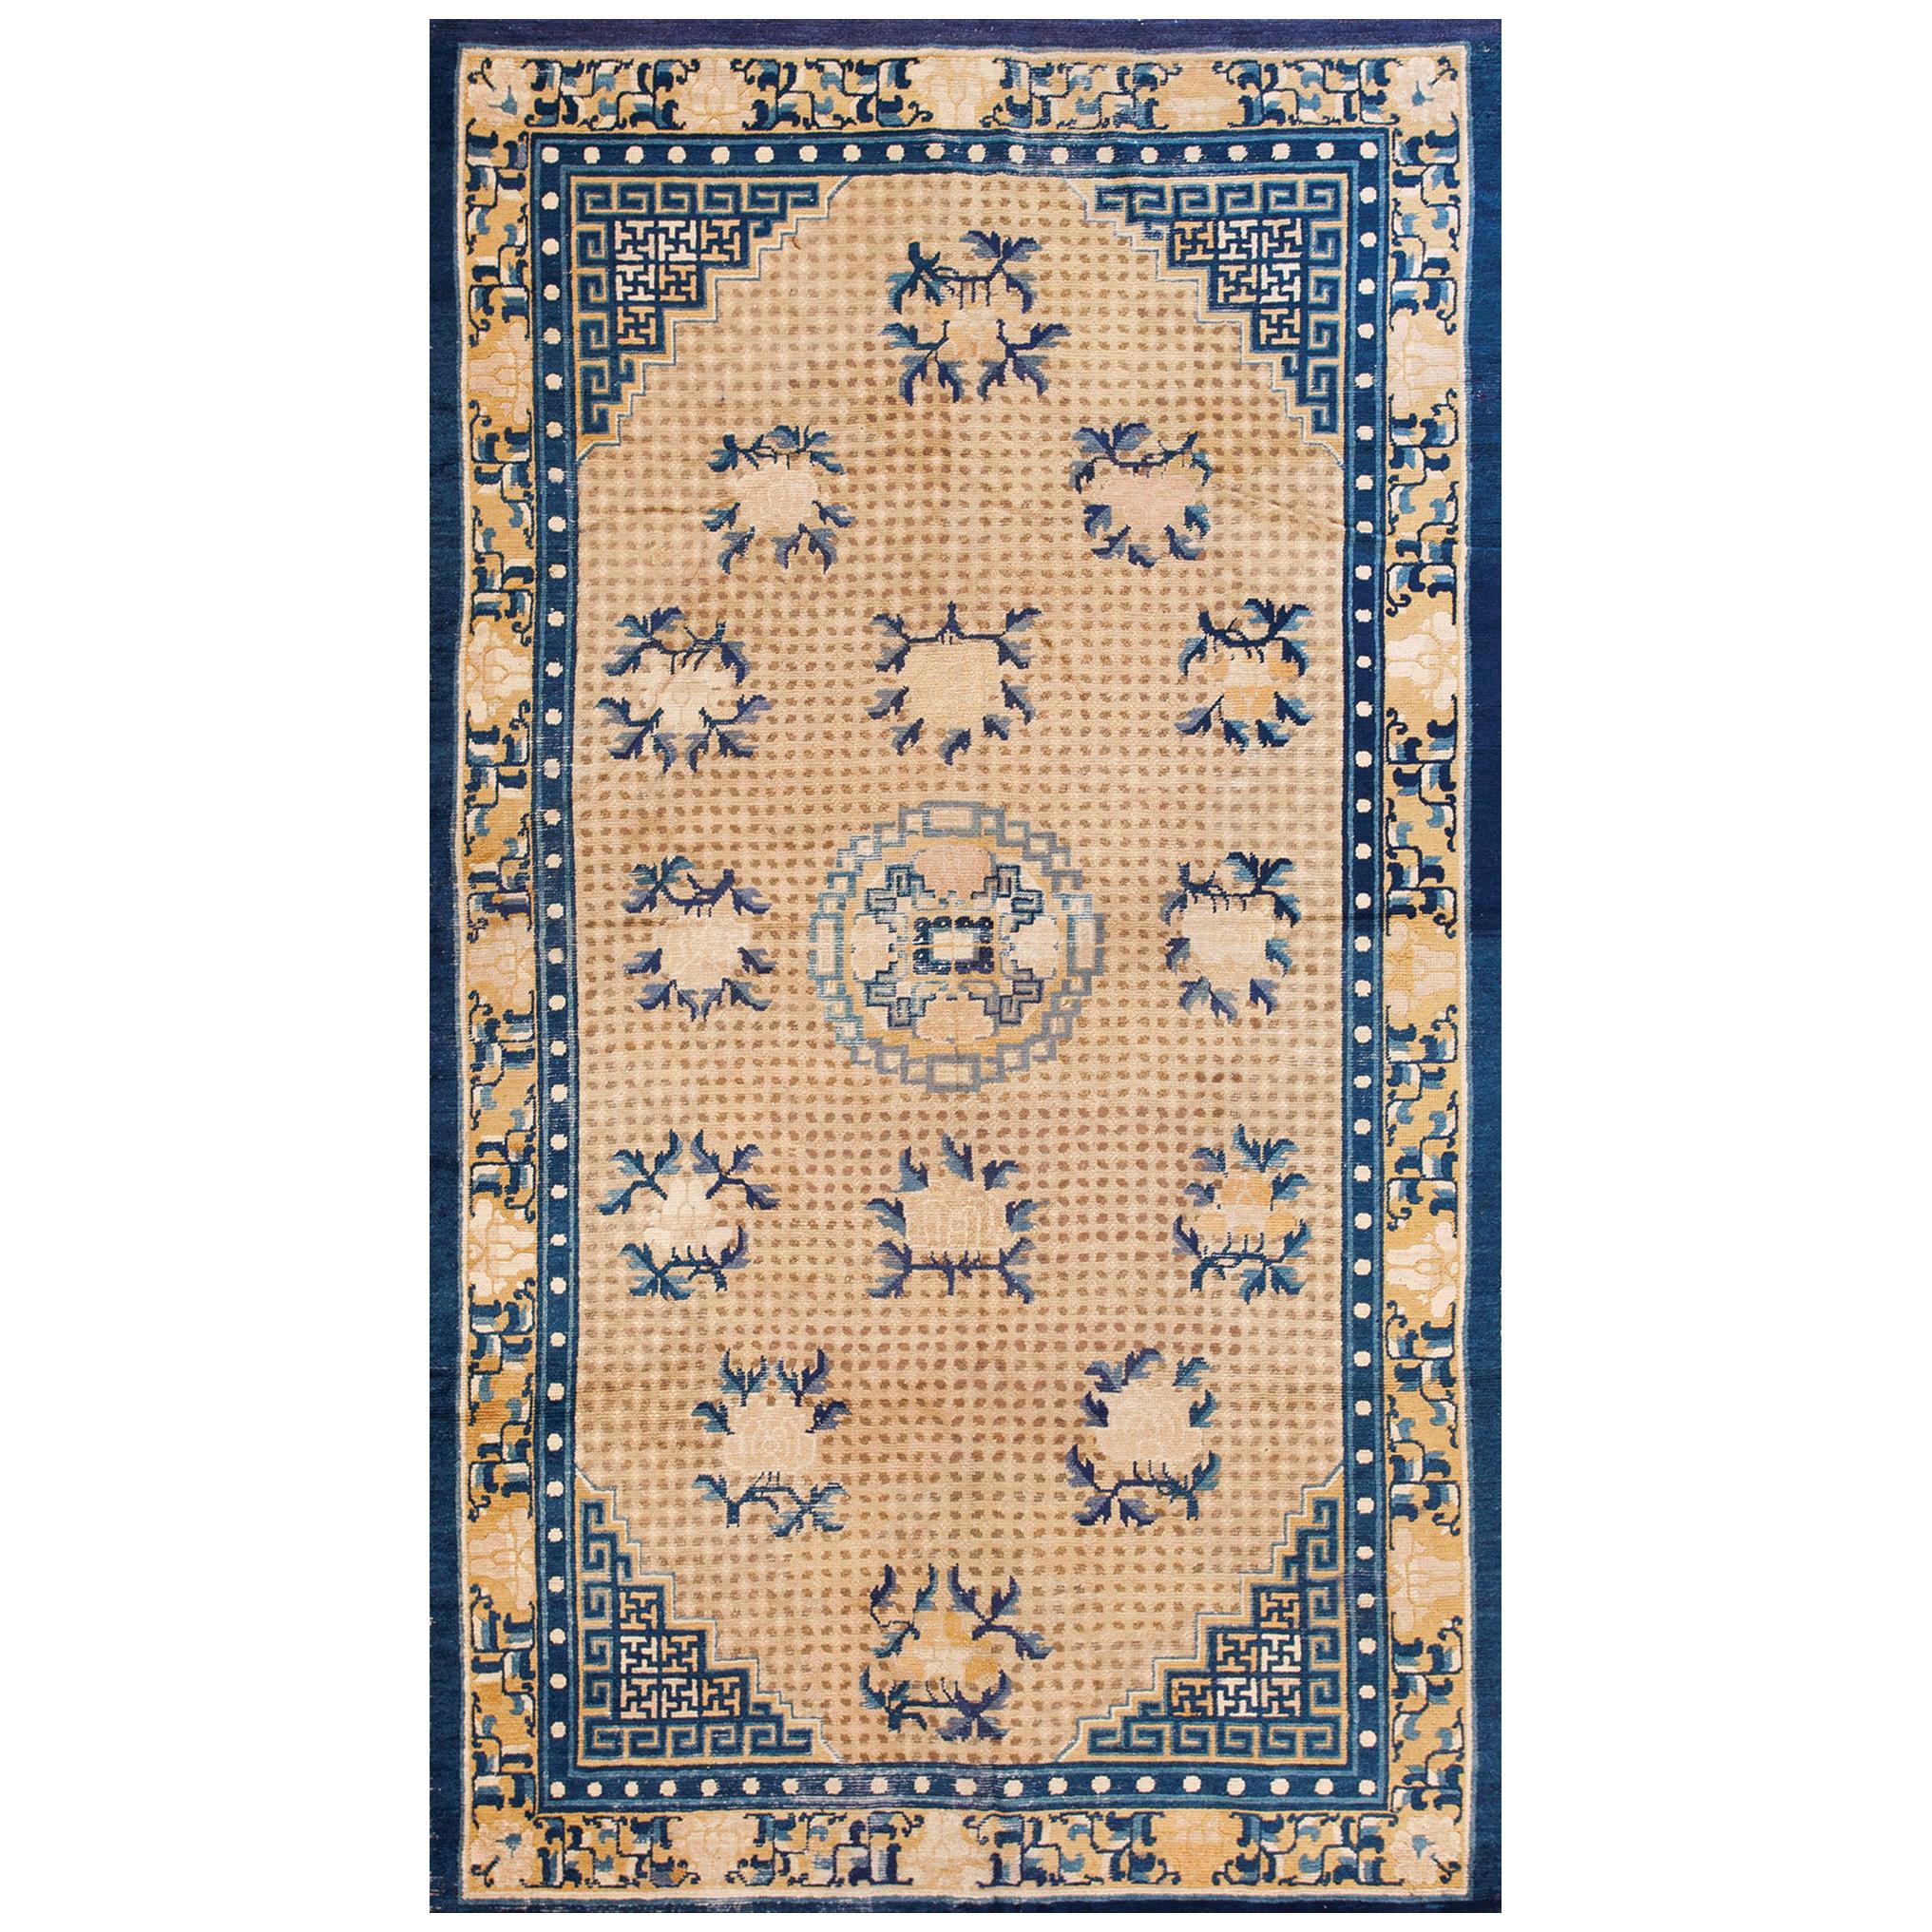 Early 19th Century Chinese Ningxia Kang Carpet  ( 6'5" 11'4" - 195 x 345 )